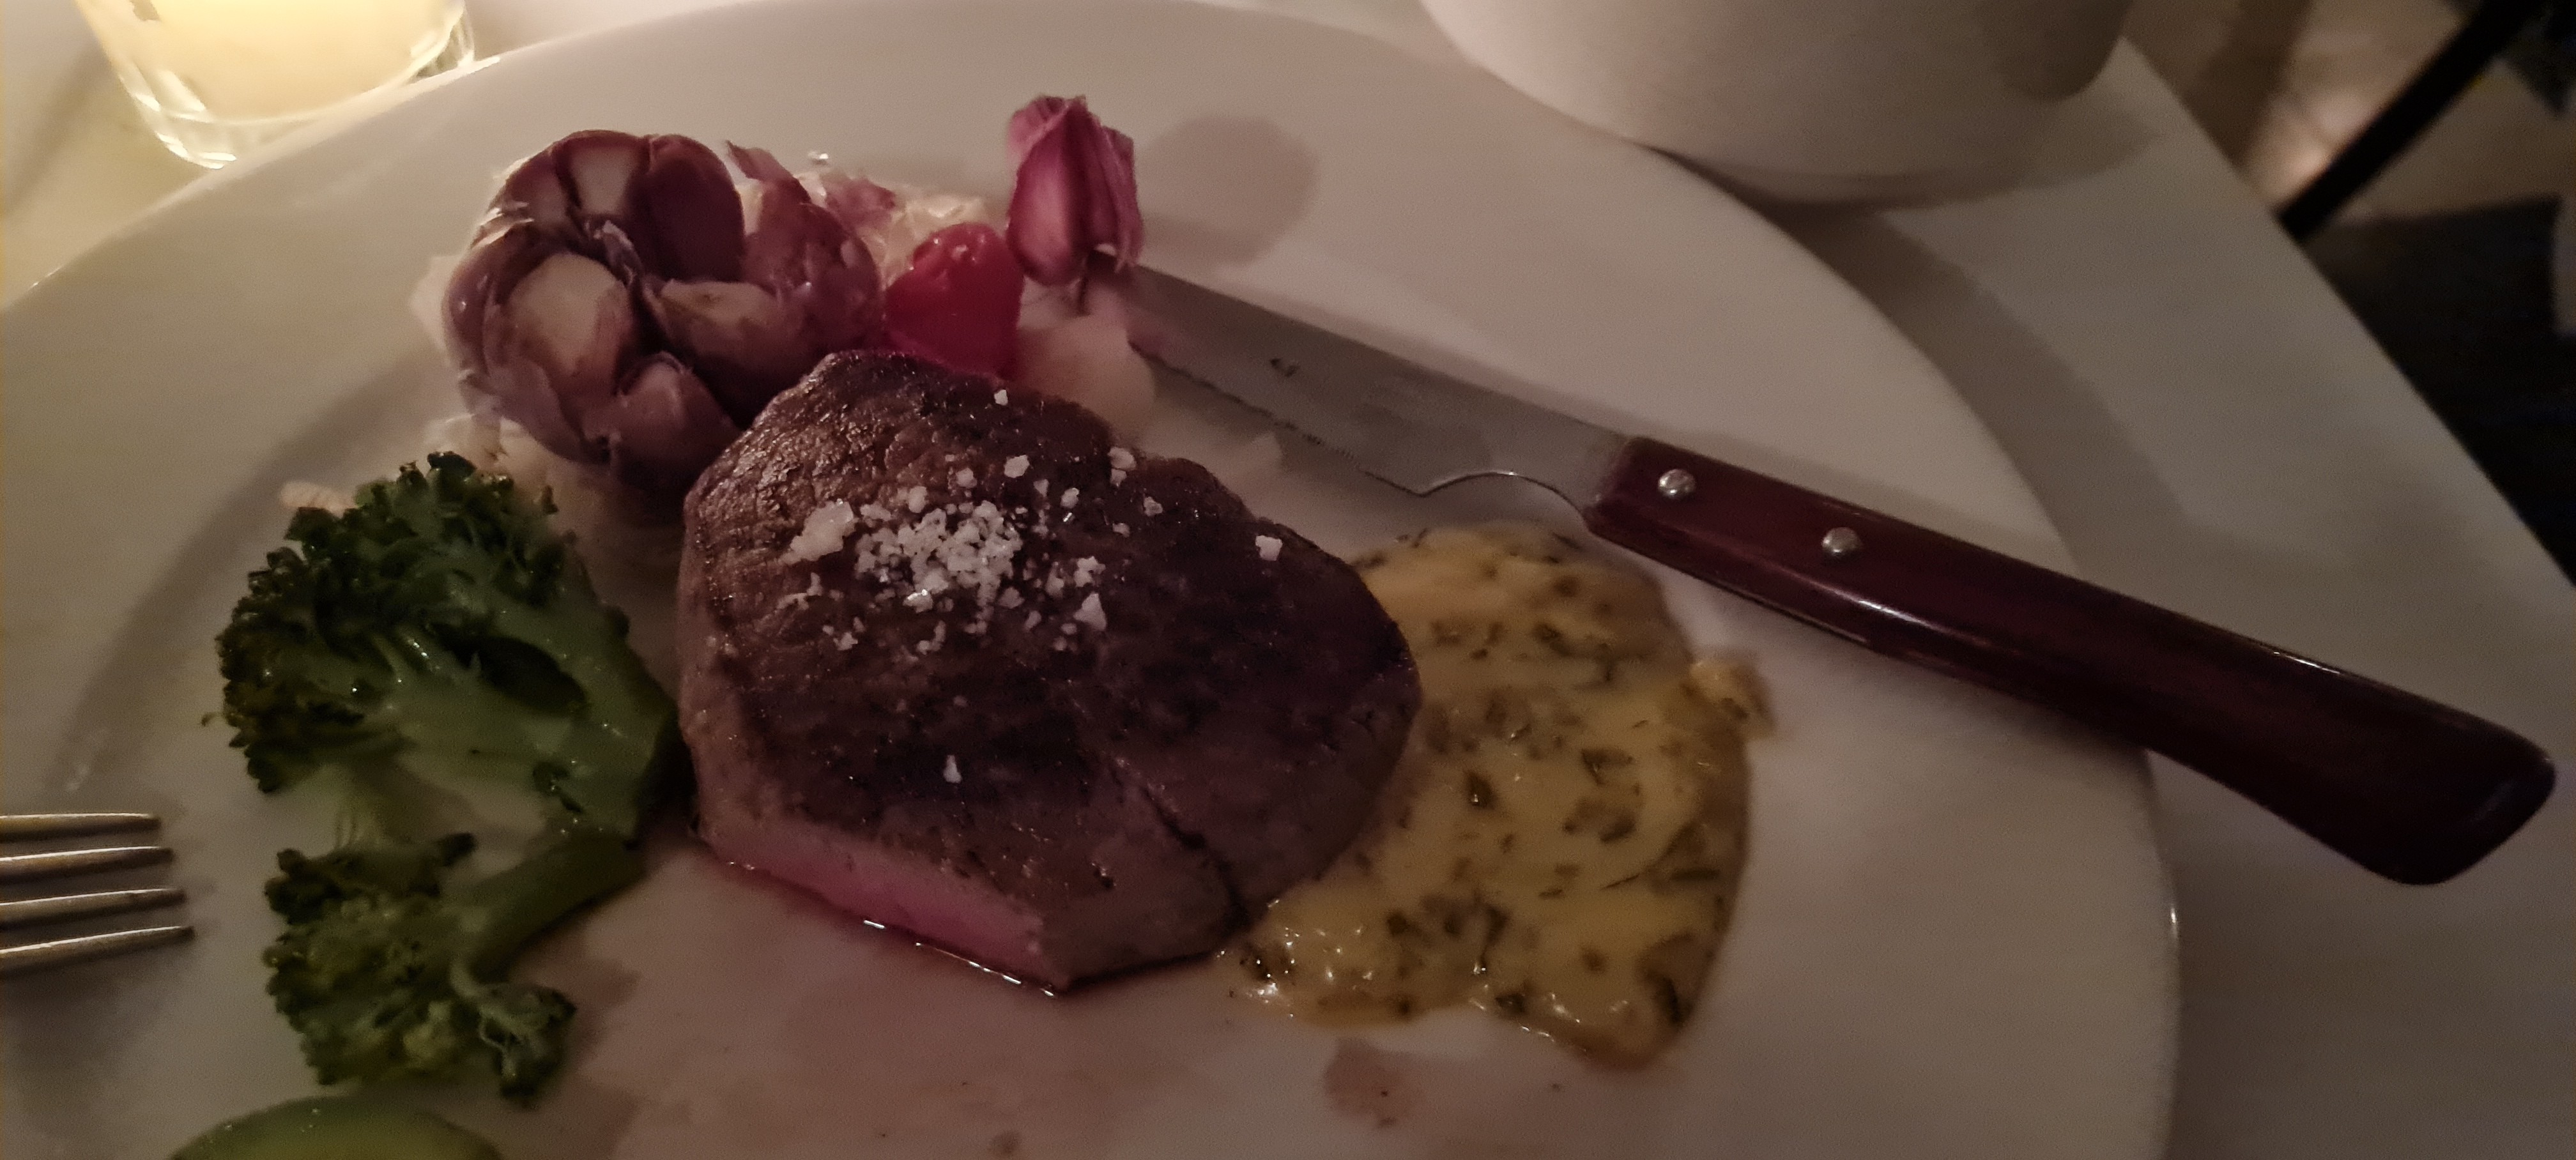 Steak for dinner at Grand Cafe de la Poste, Marrakech